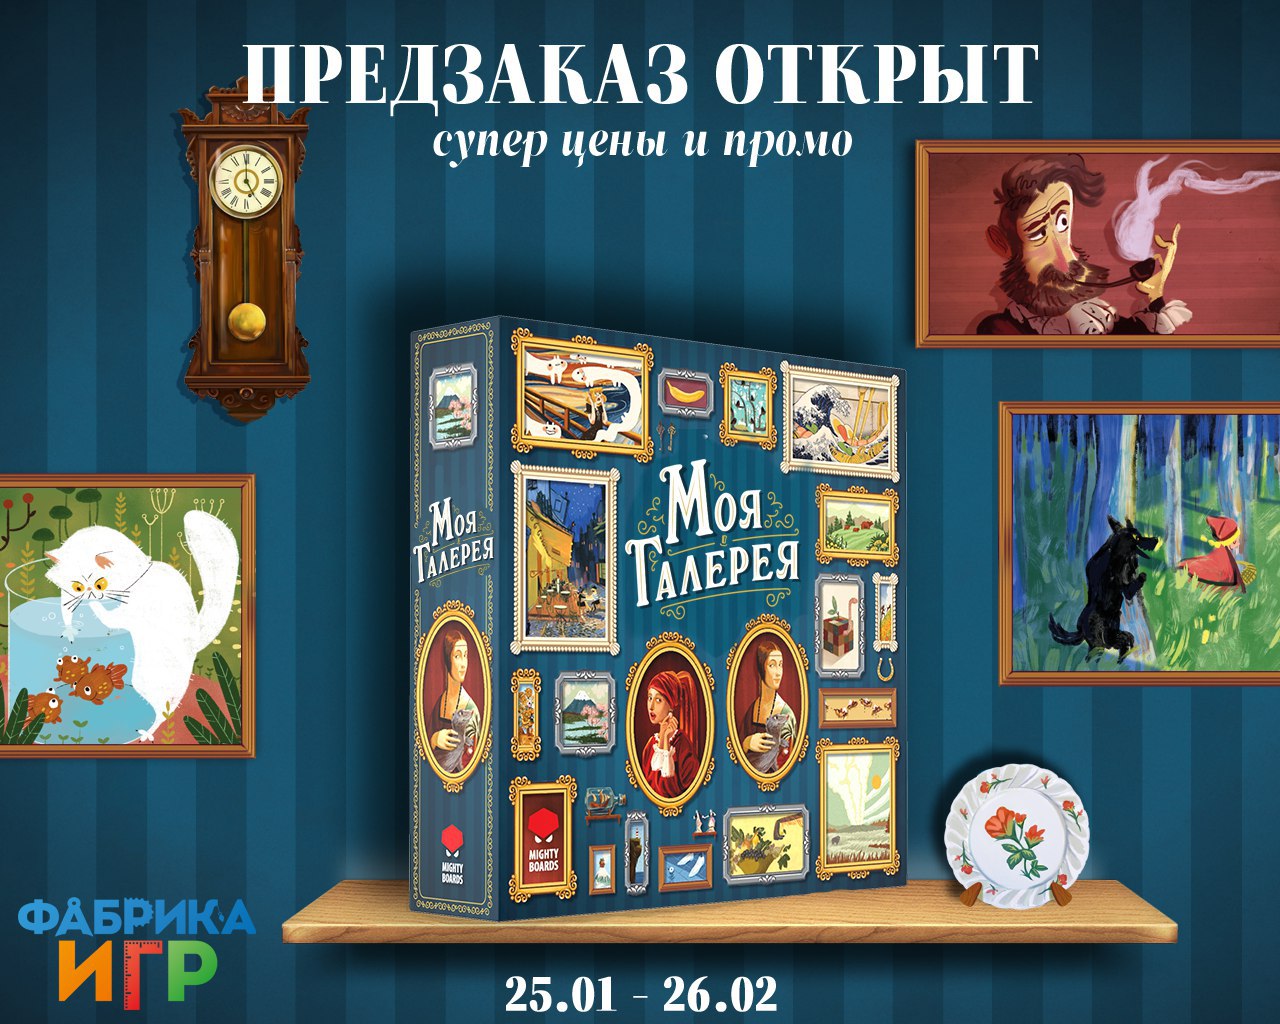 "Моя галерея" (Art Society) - выходит на русском языке